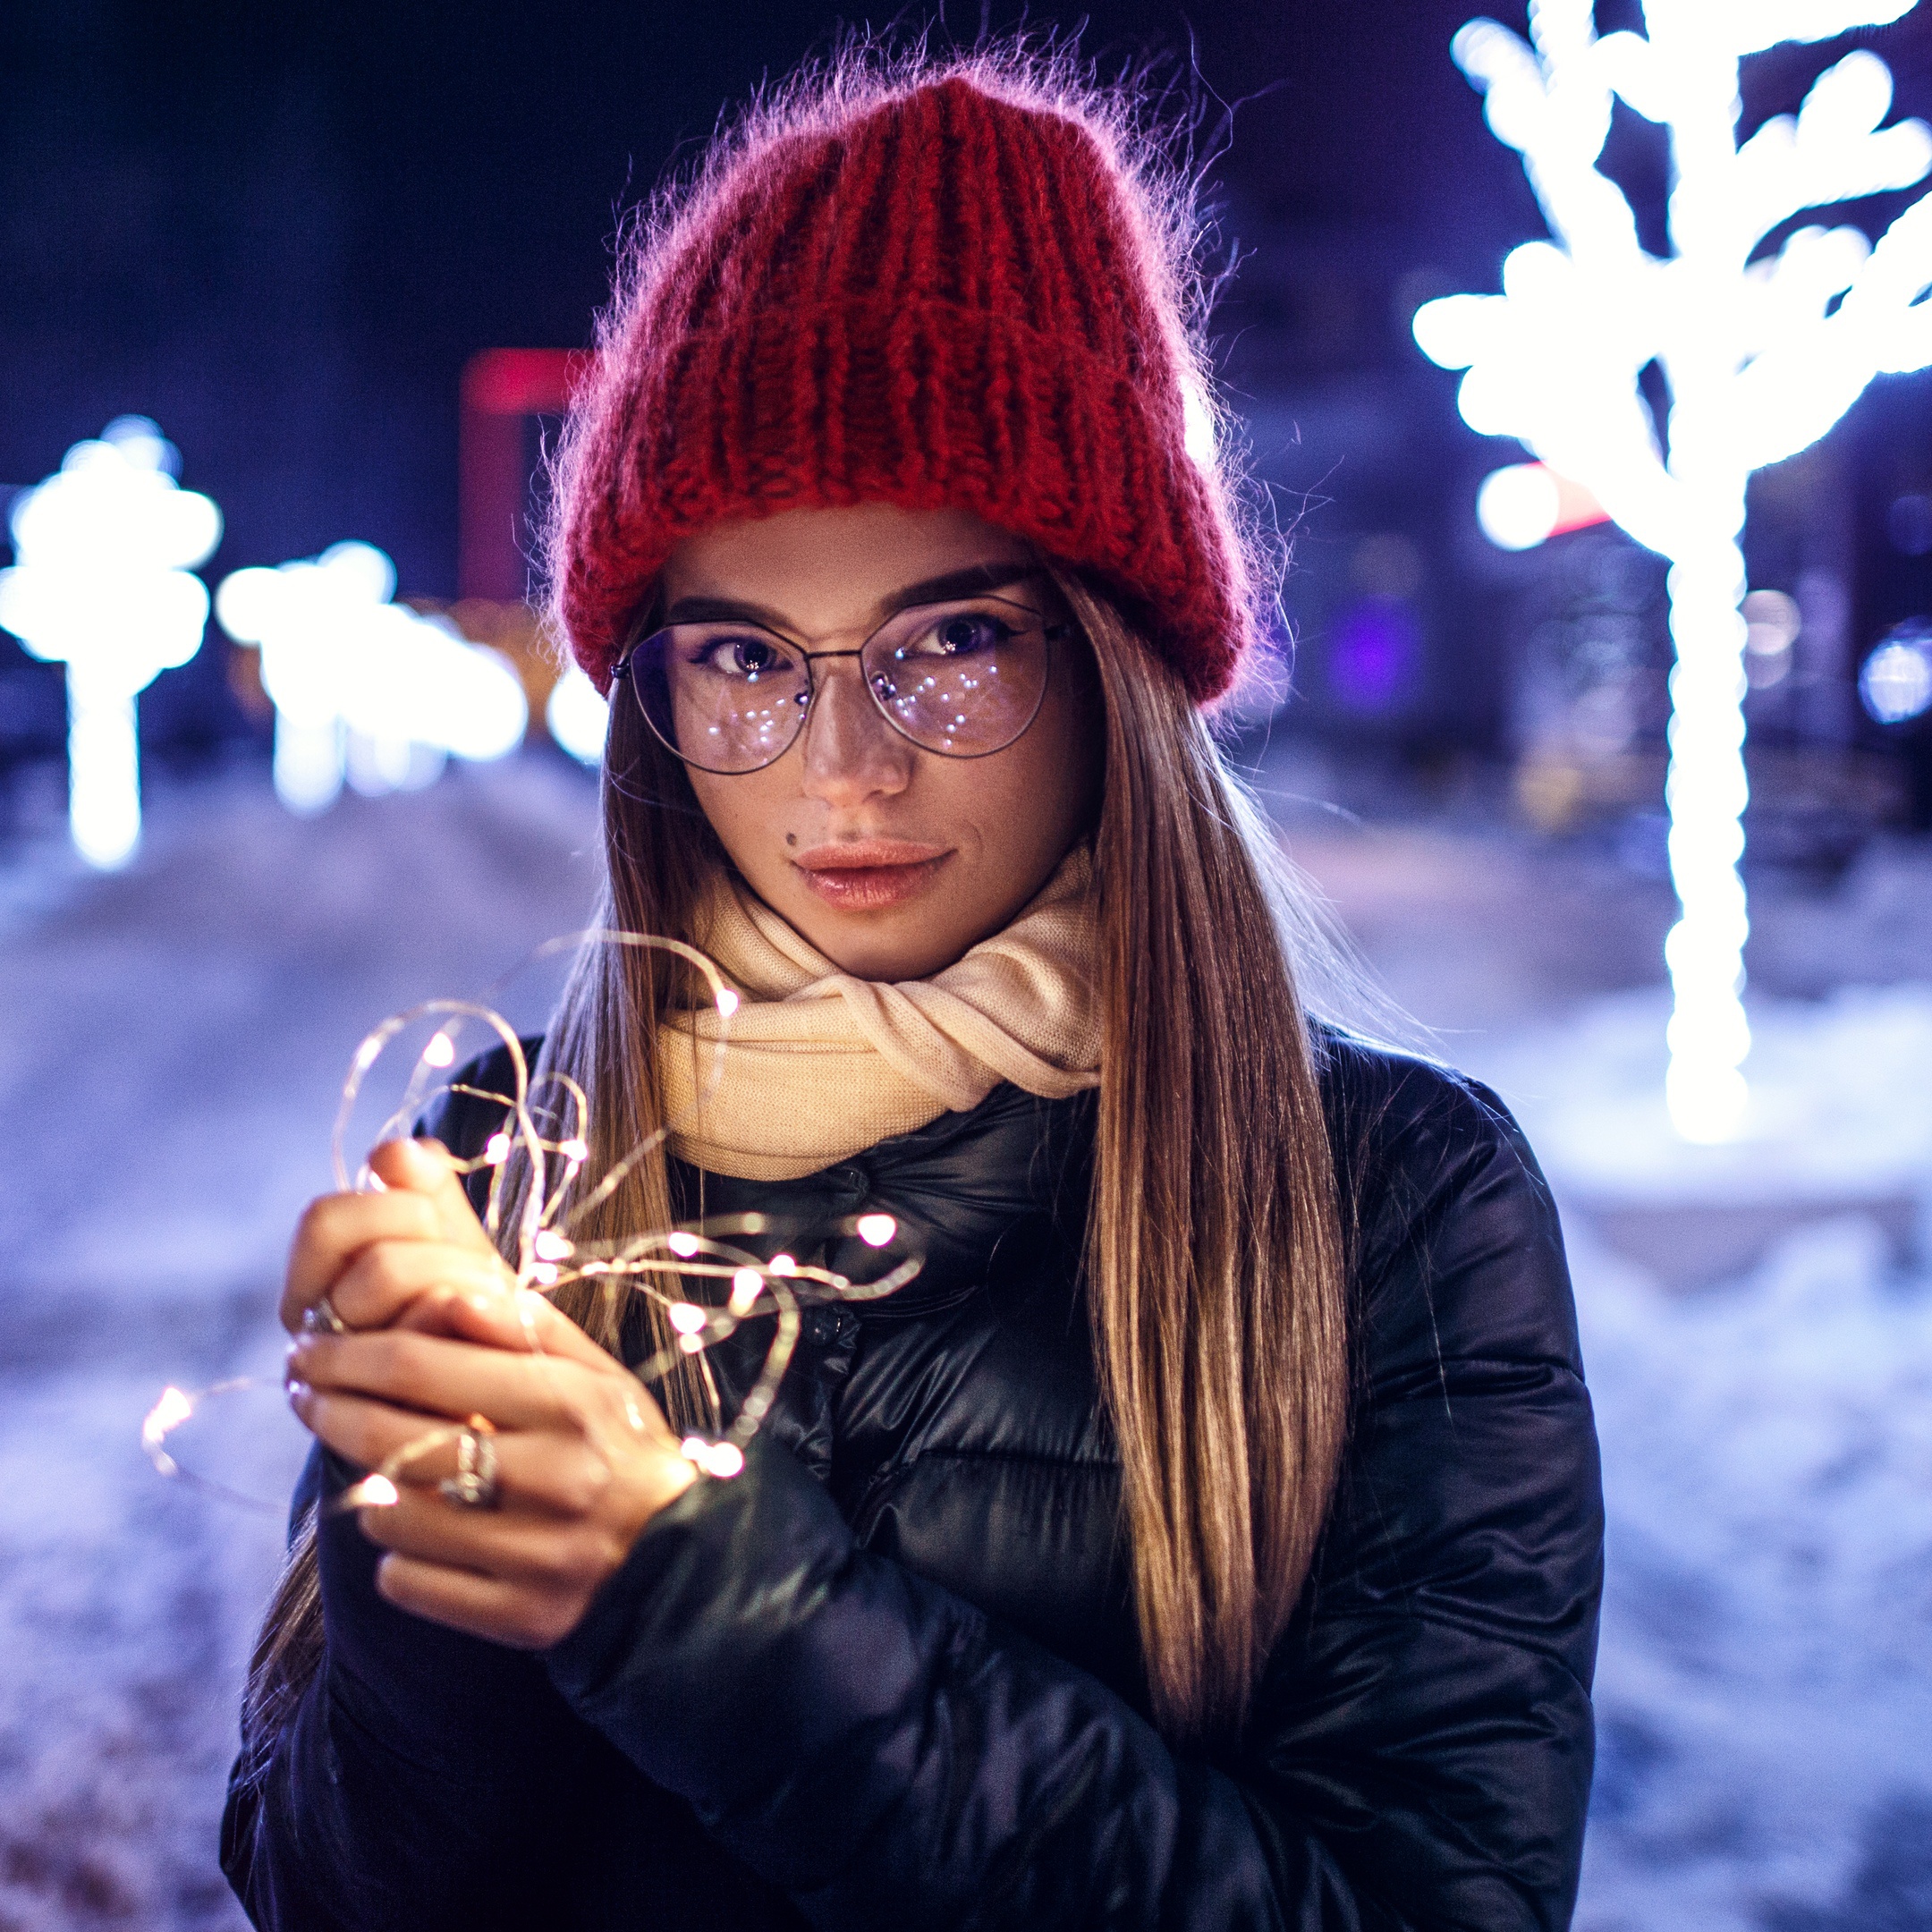 People 2160x2160 Sergey Sorokin winter lights urban women women outdoors women with glasses Red cap black jackets wool cap Luba Ivanova portrait display